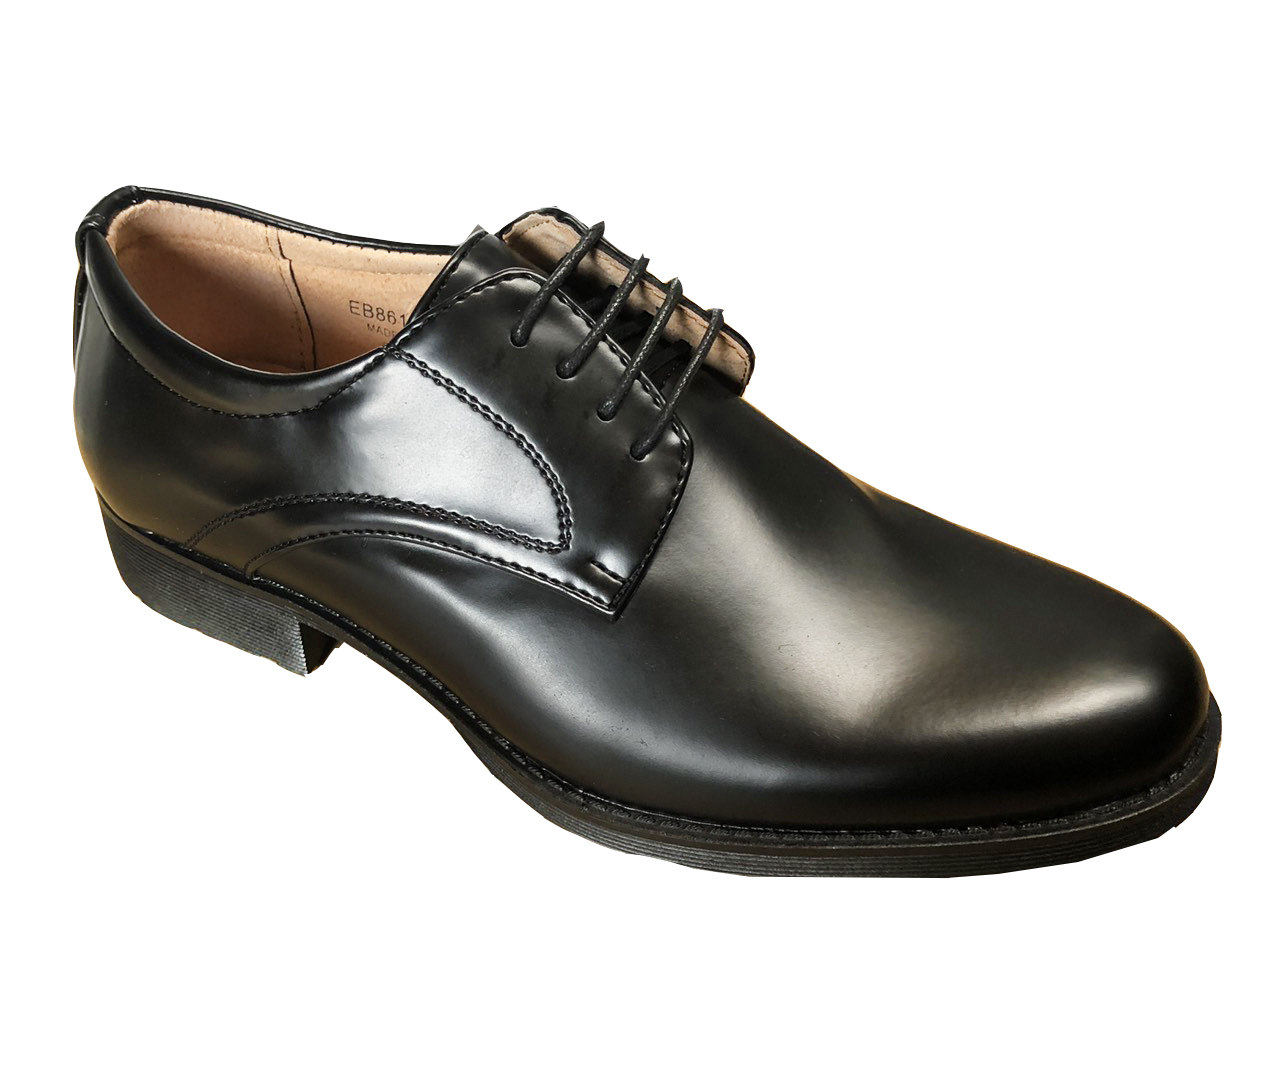 EB8612 學生皮鞋, 黑色-25.5cm, large